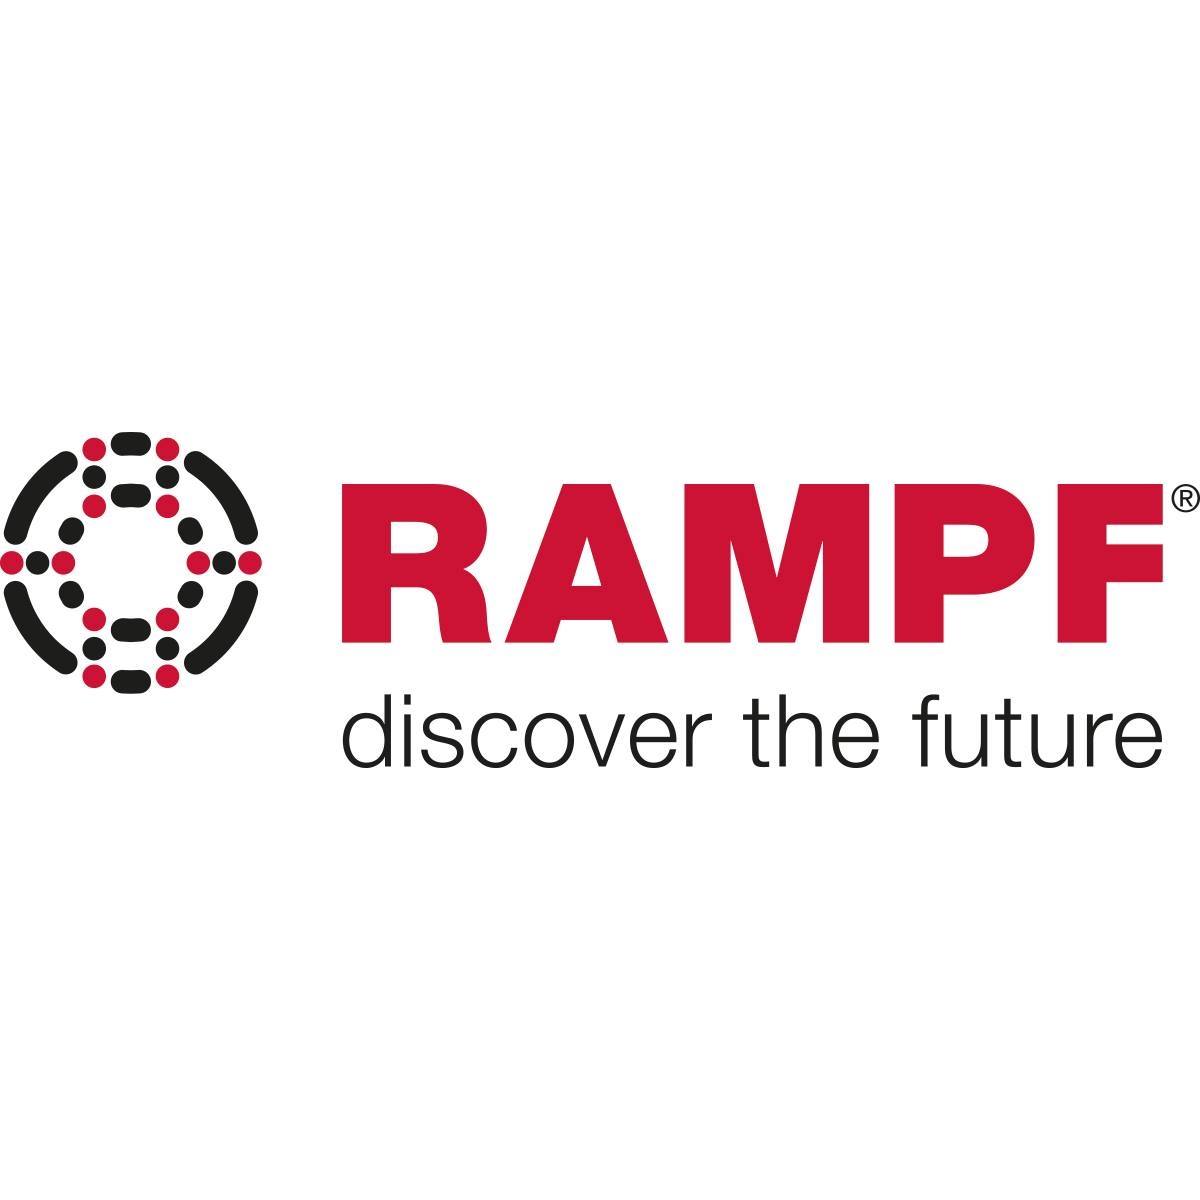 RAMPF Holding GmbH & Co.KG